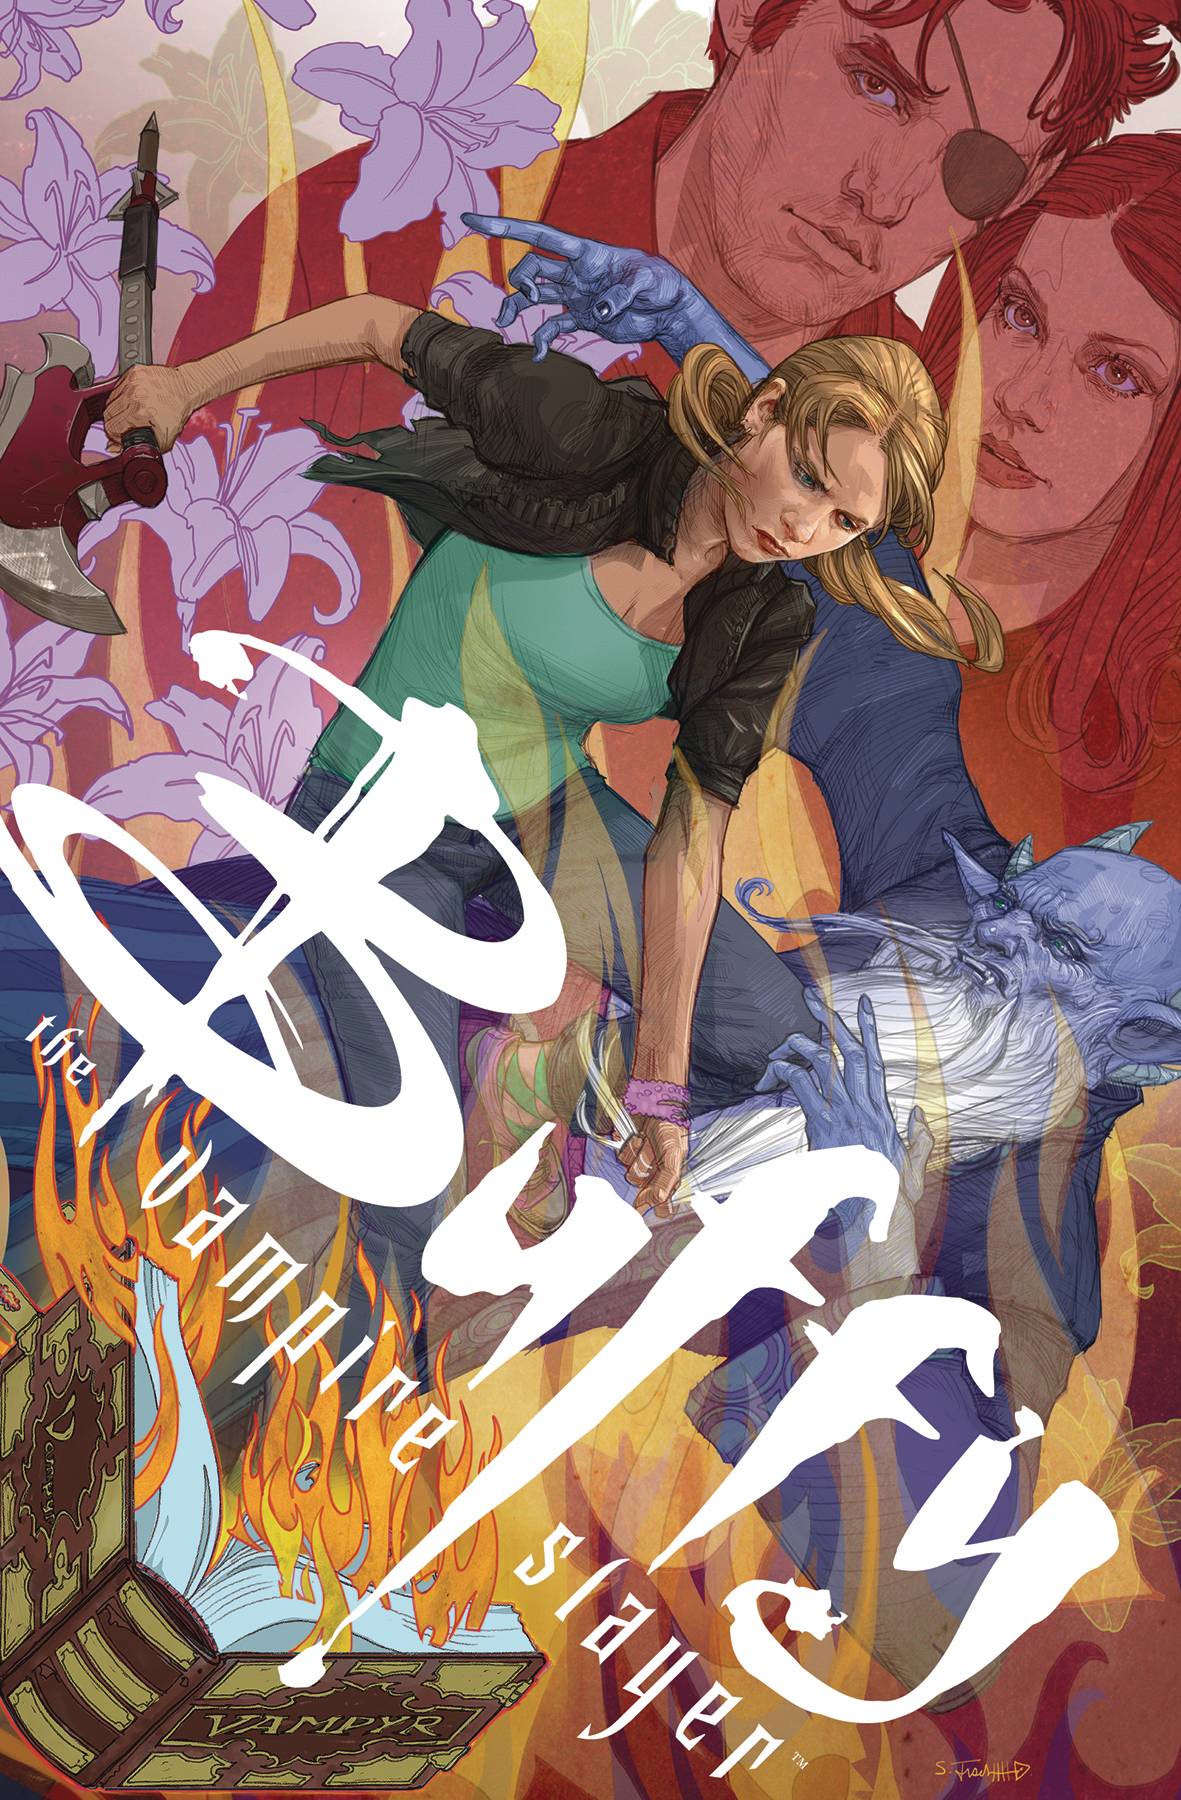 Buffy the Vampire Slayer Season 10 Library Edition Hardcover Volume 3